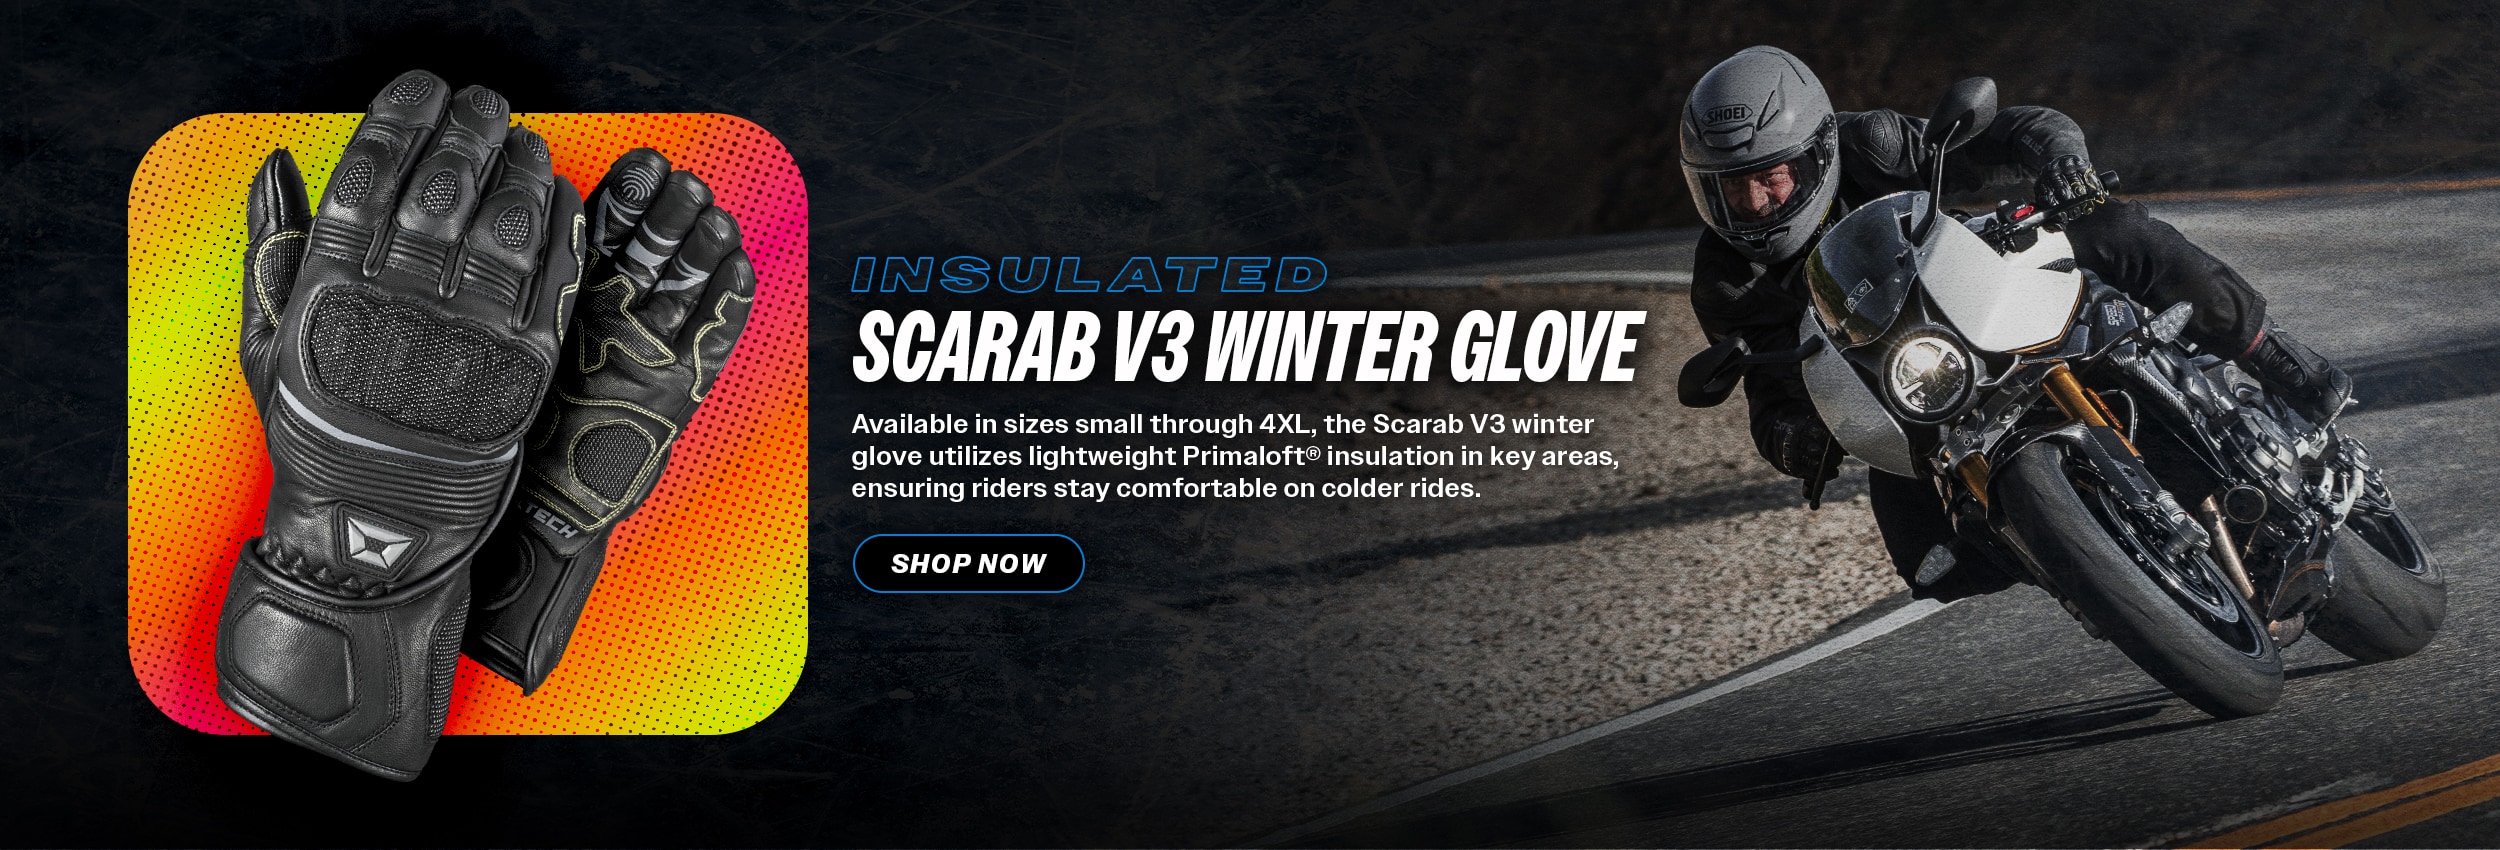 Cortech Scarab v3 Winter Glove